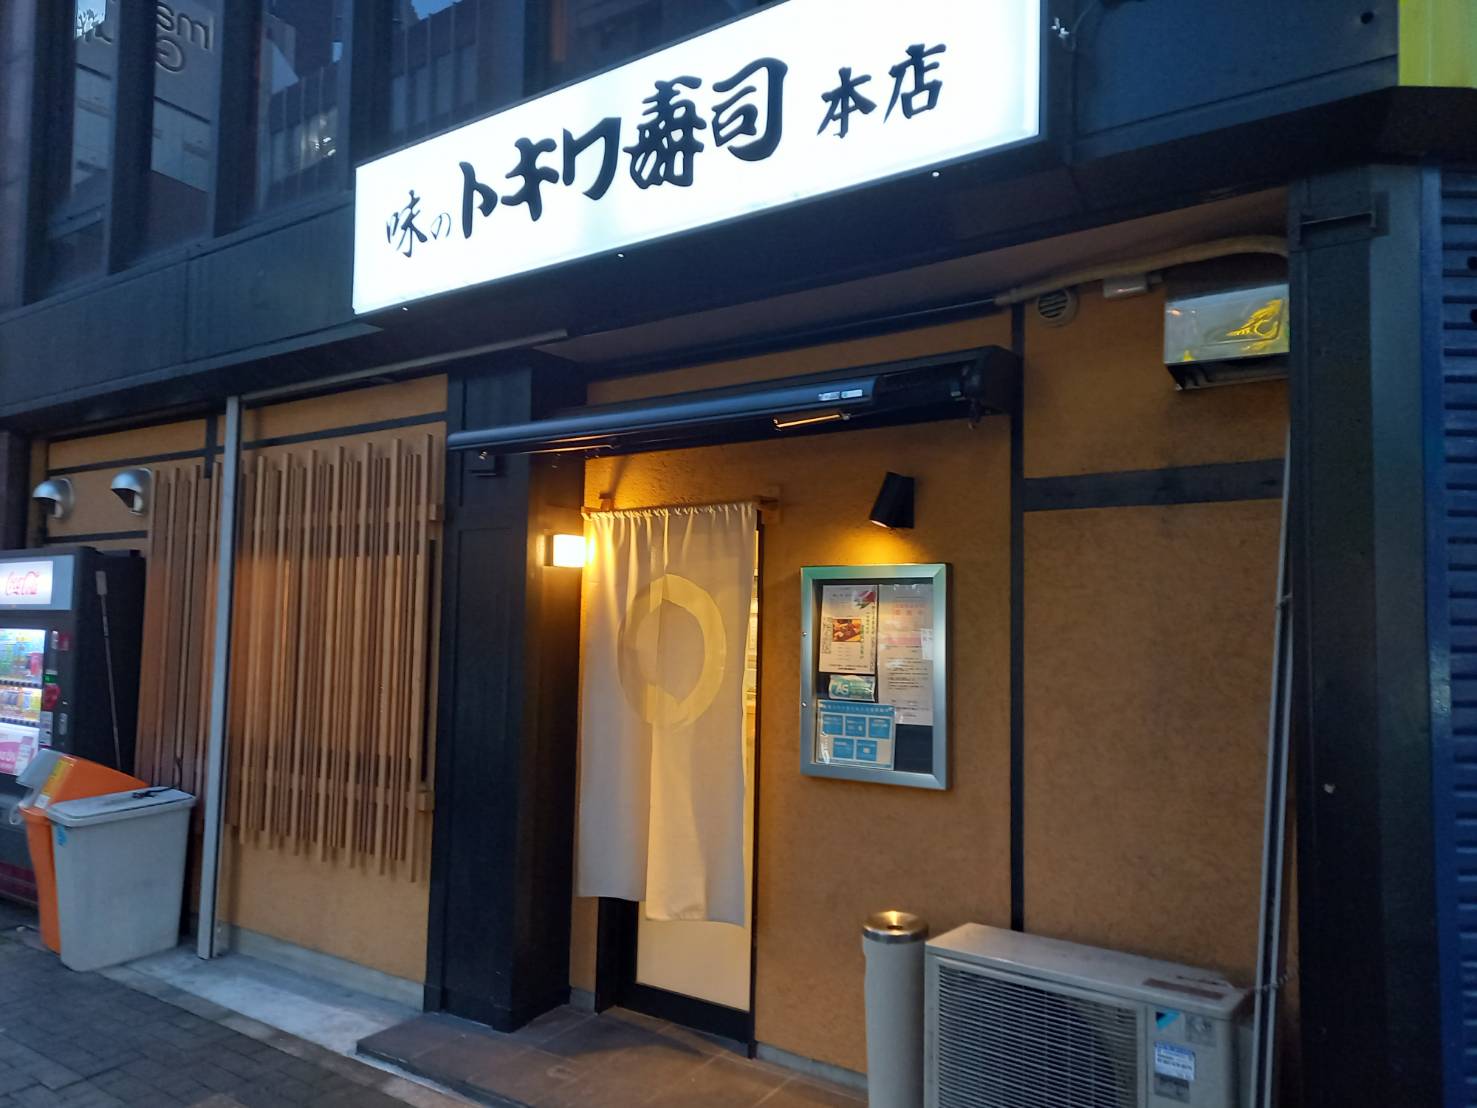 トキワ寿司 本店